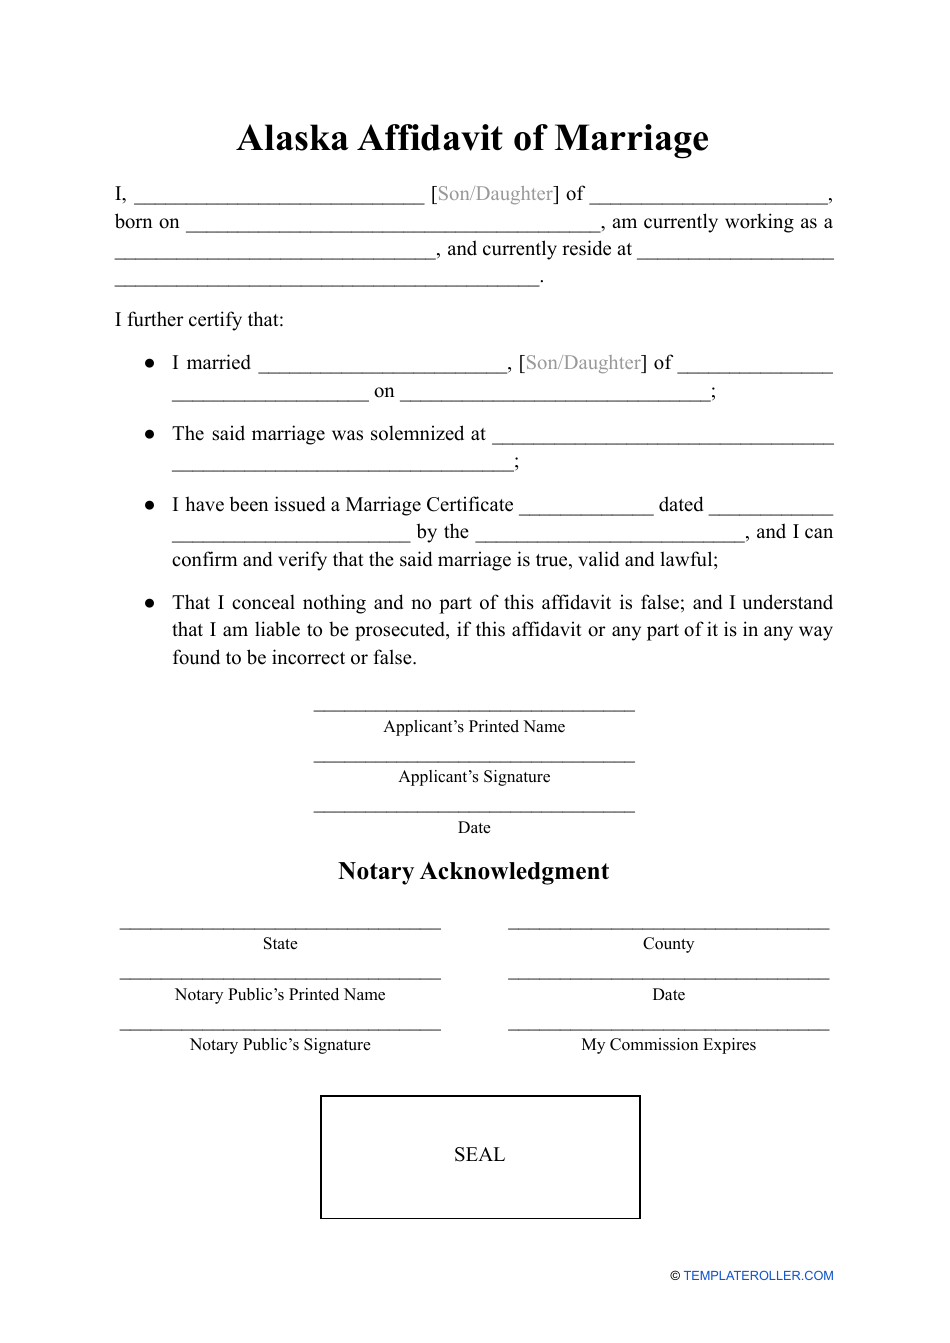 Affidavit of Marriage - Alaska, Page 1